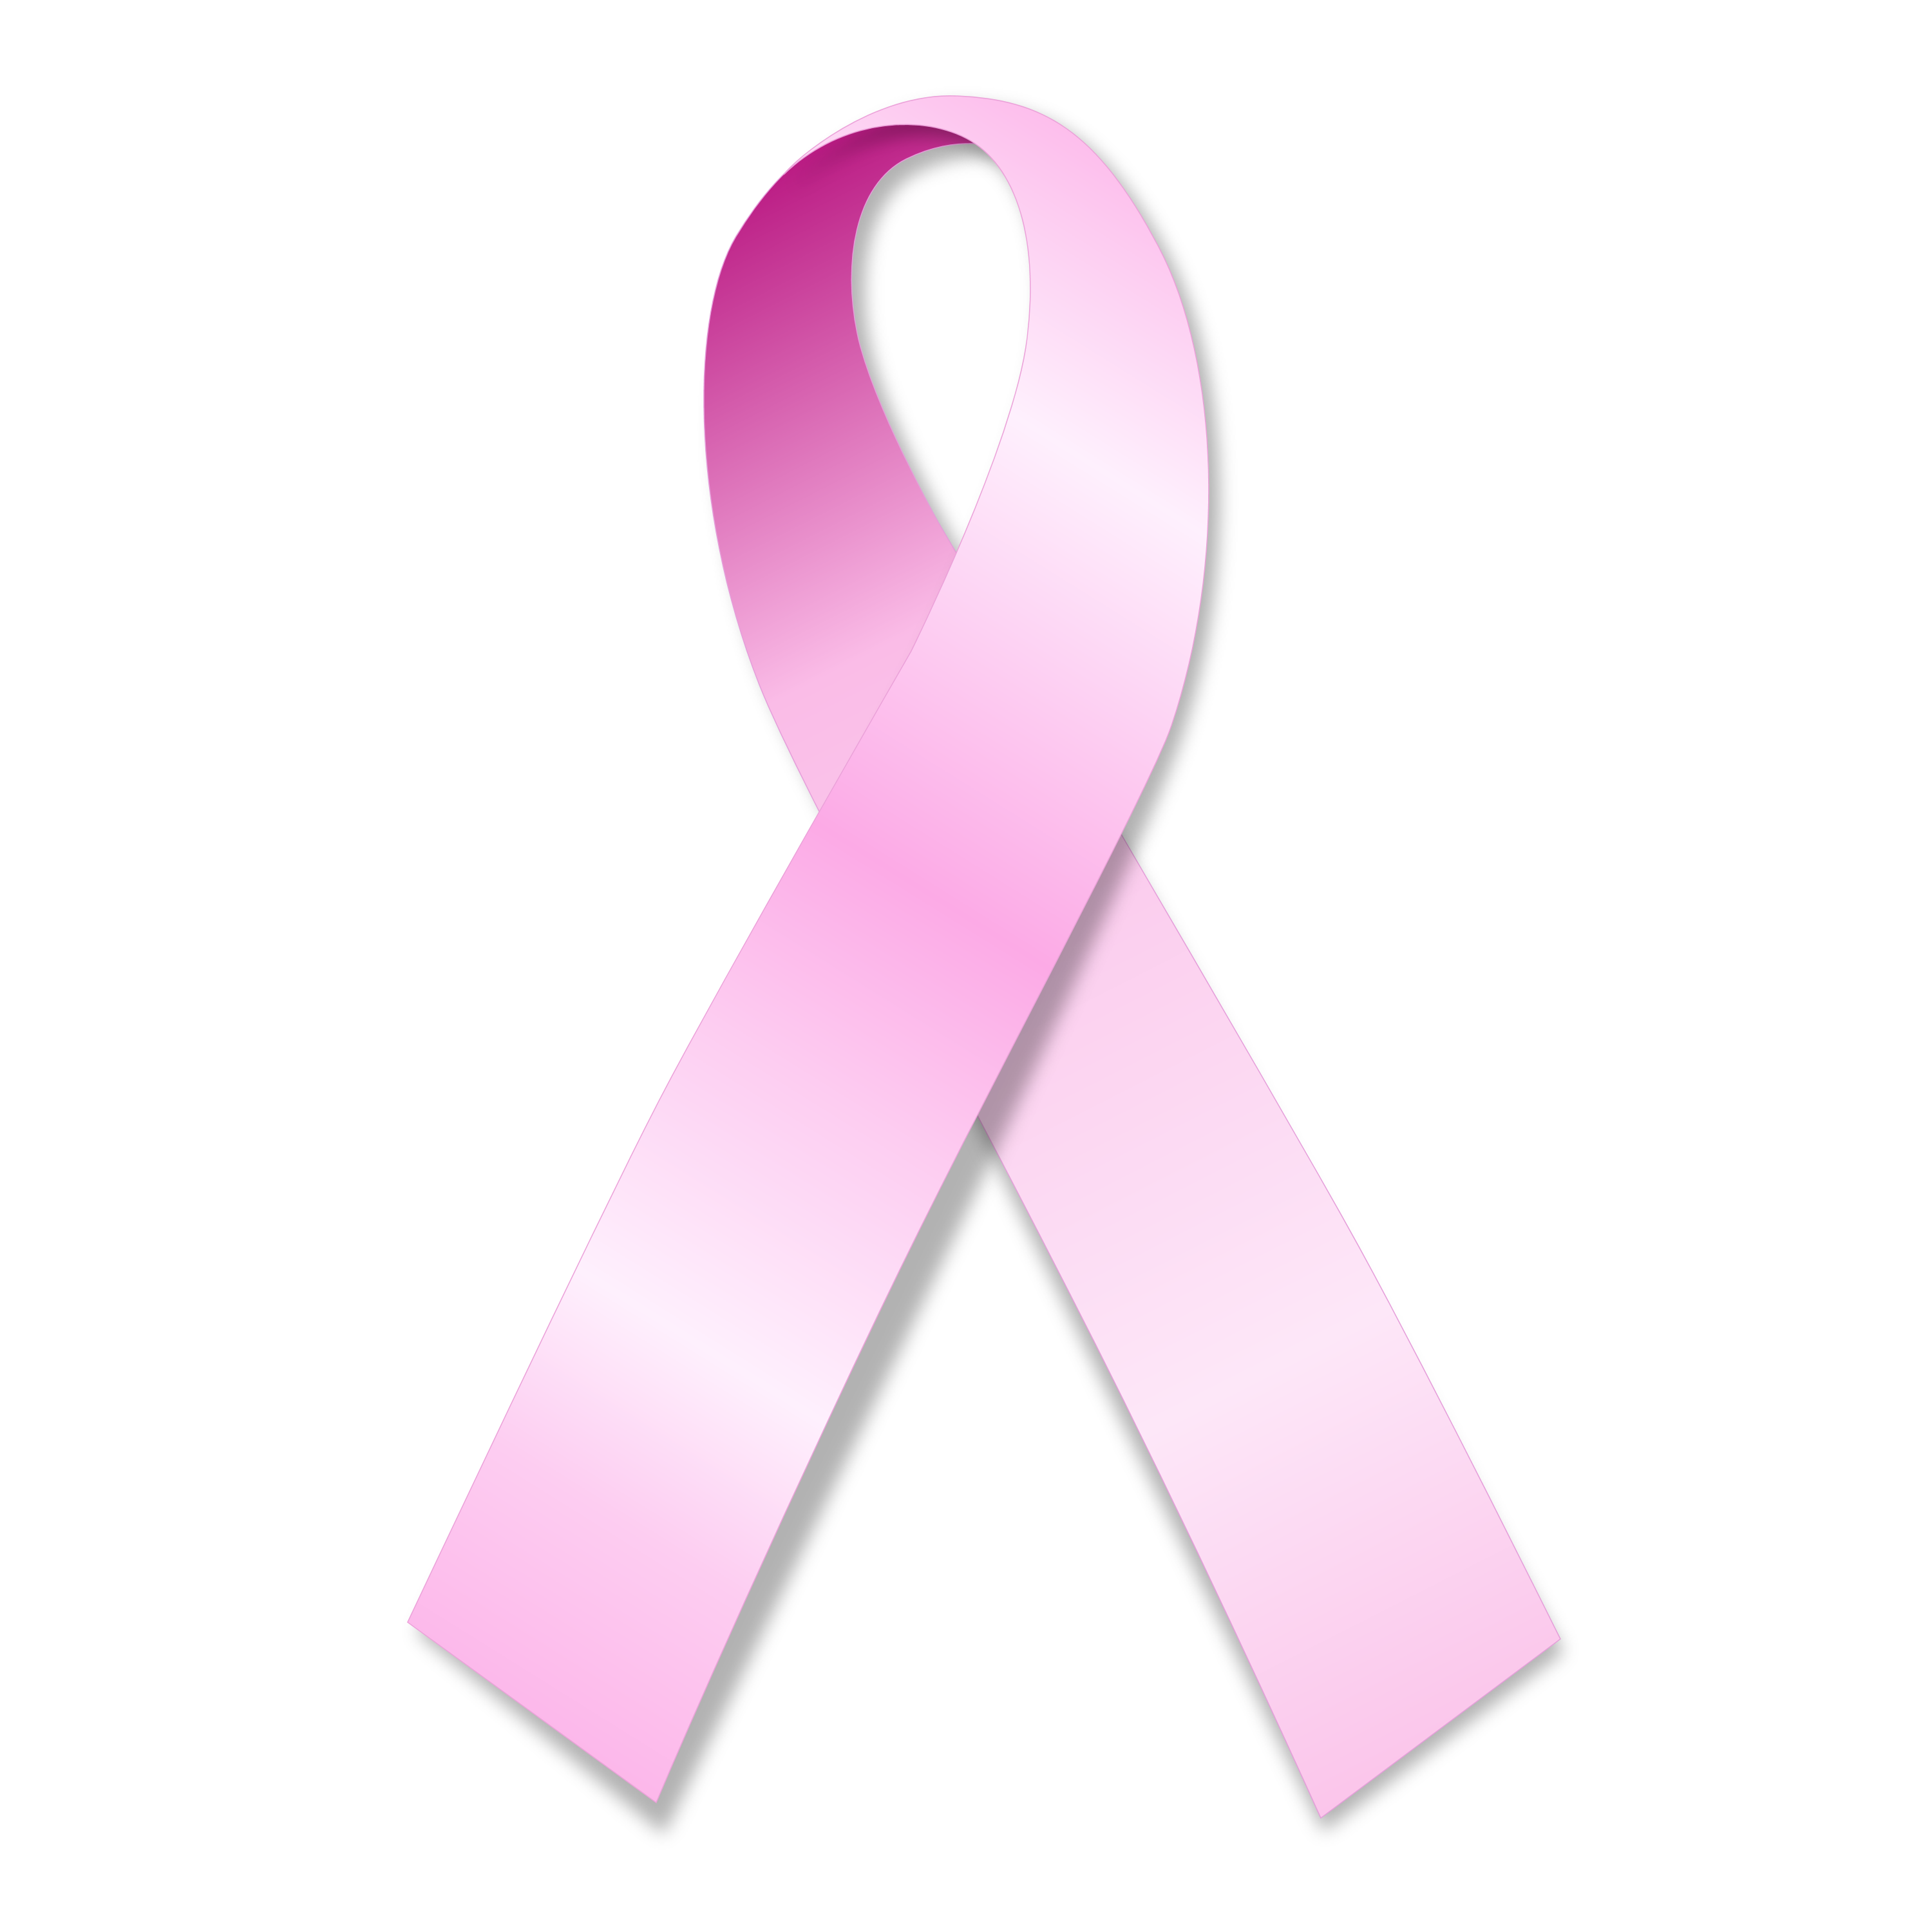 Breast Cancer Ribbon Clip Art Free Vector F7pOF756 | Your Health ...